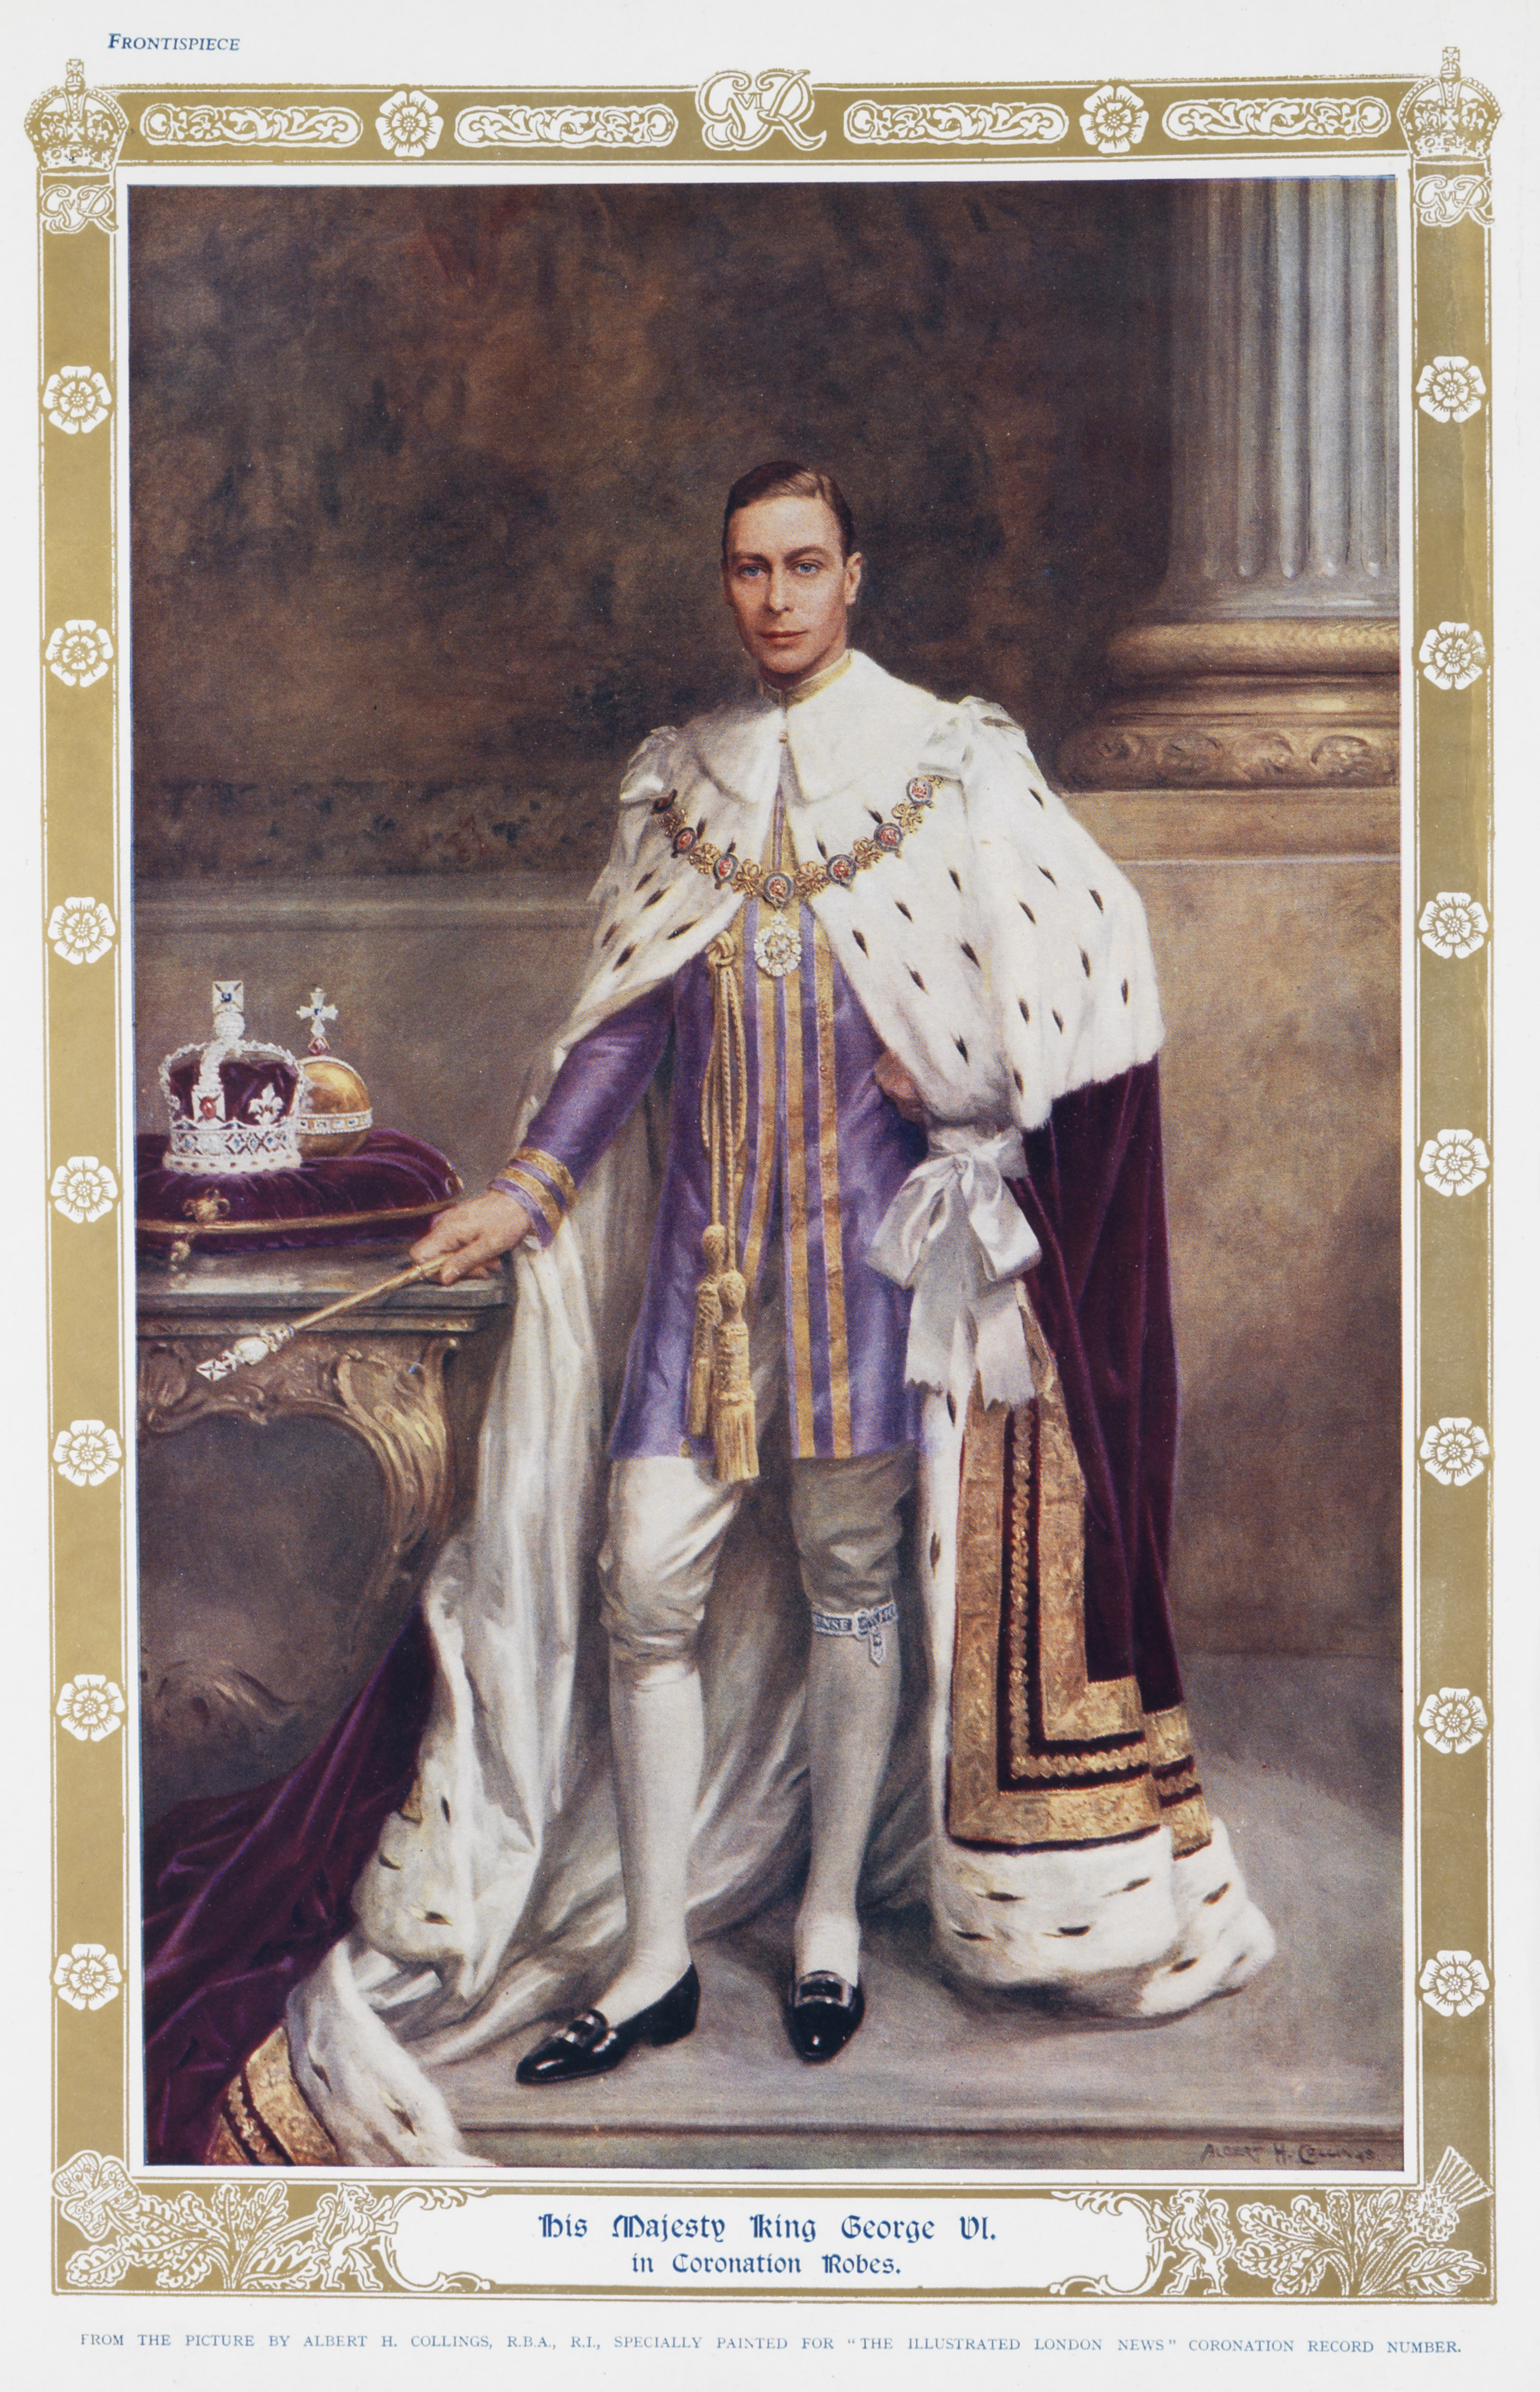 Royal photoshop - King George VI Coronation robes